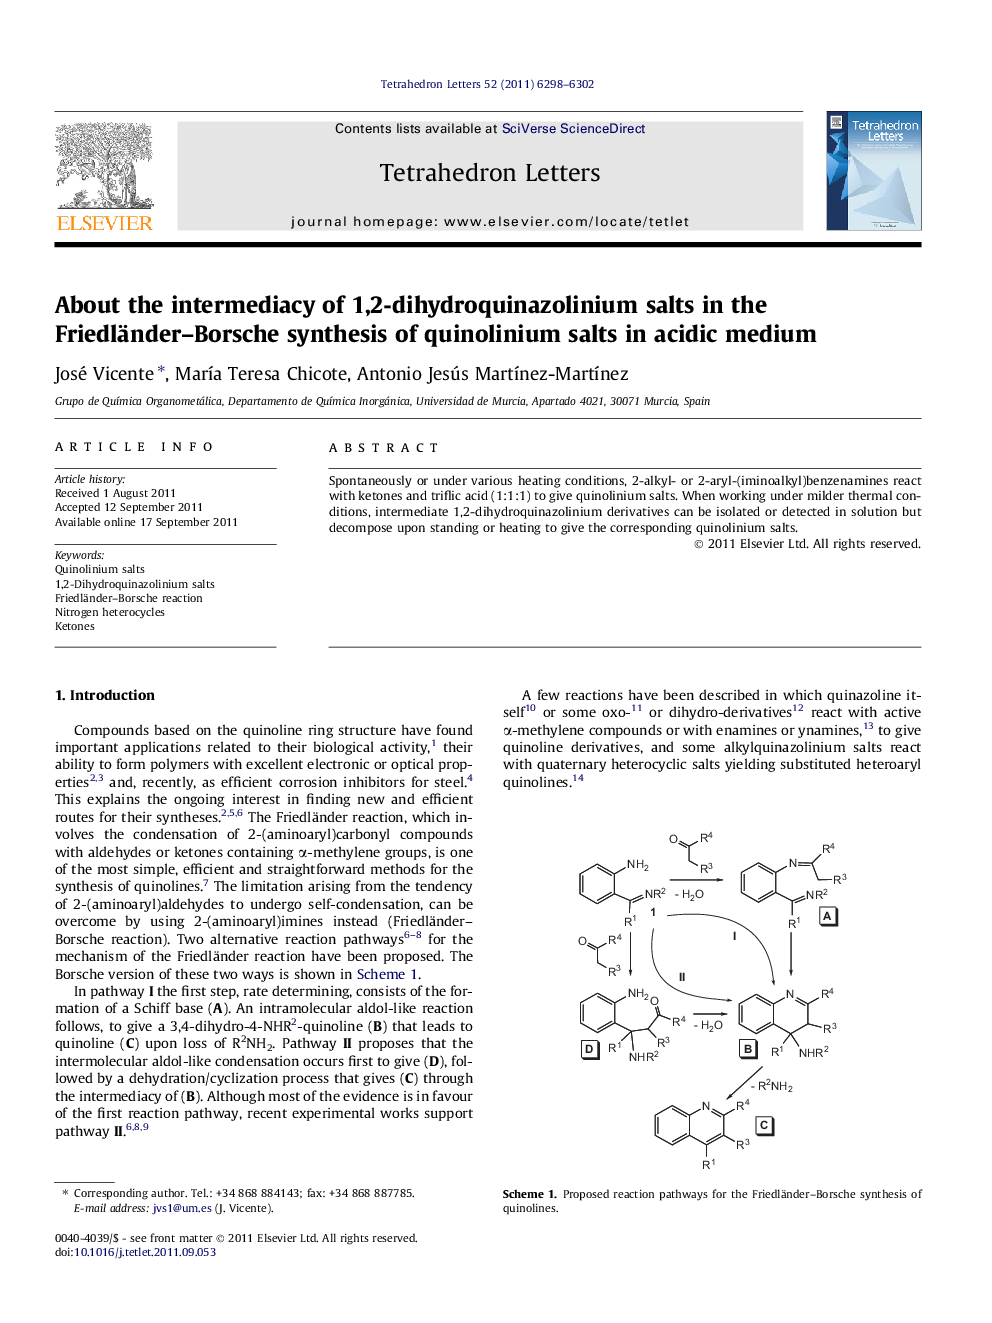 About the intermediacy of 1,2-dihydroquinazolinium salts in the Friedländer-Borsche synthesis of quinolinium salts in acidic medium